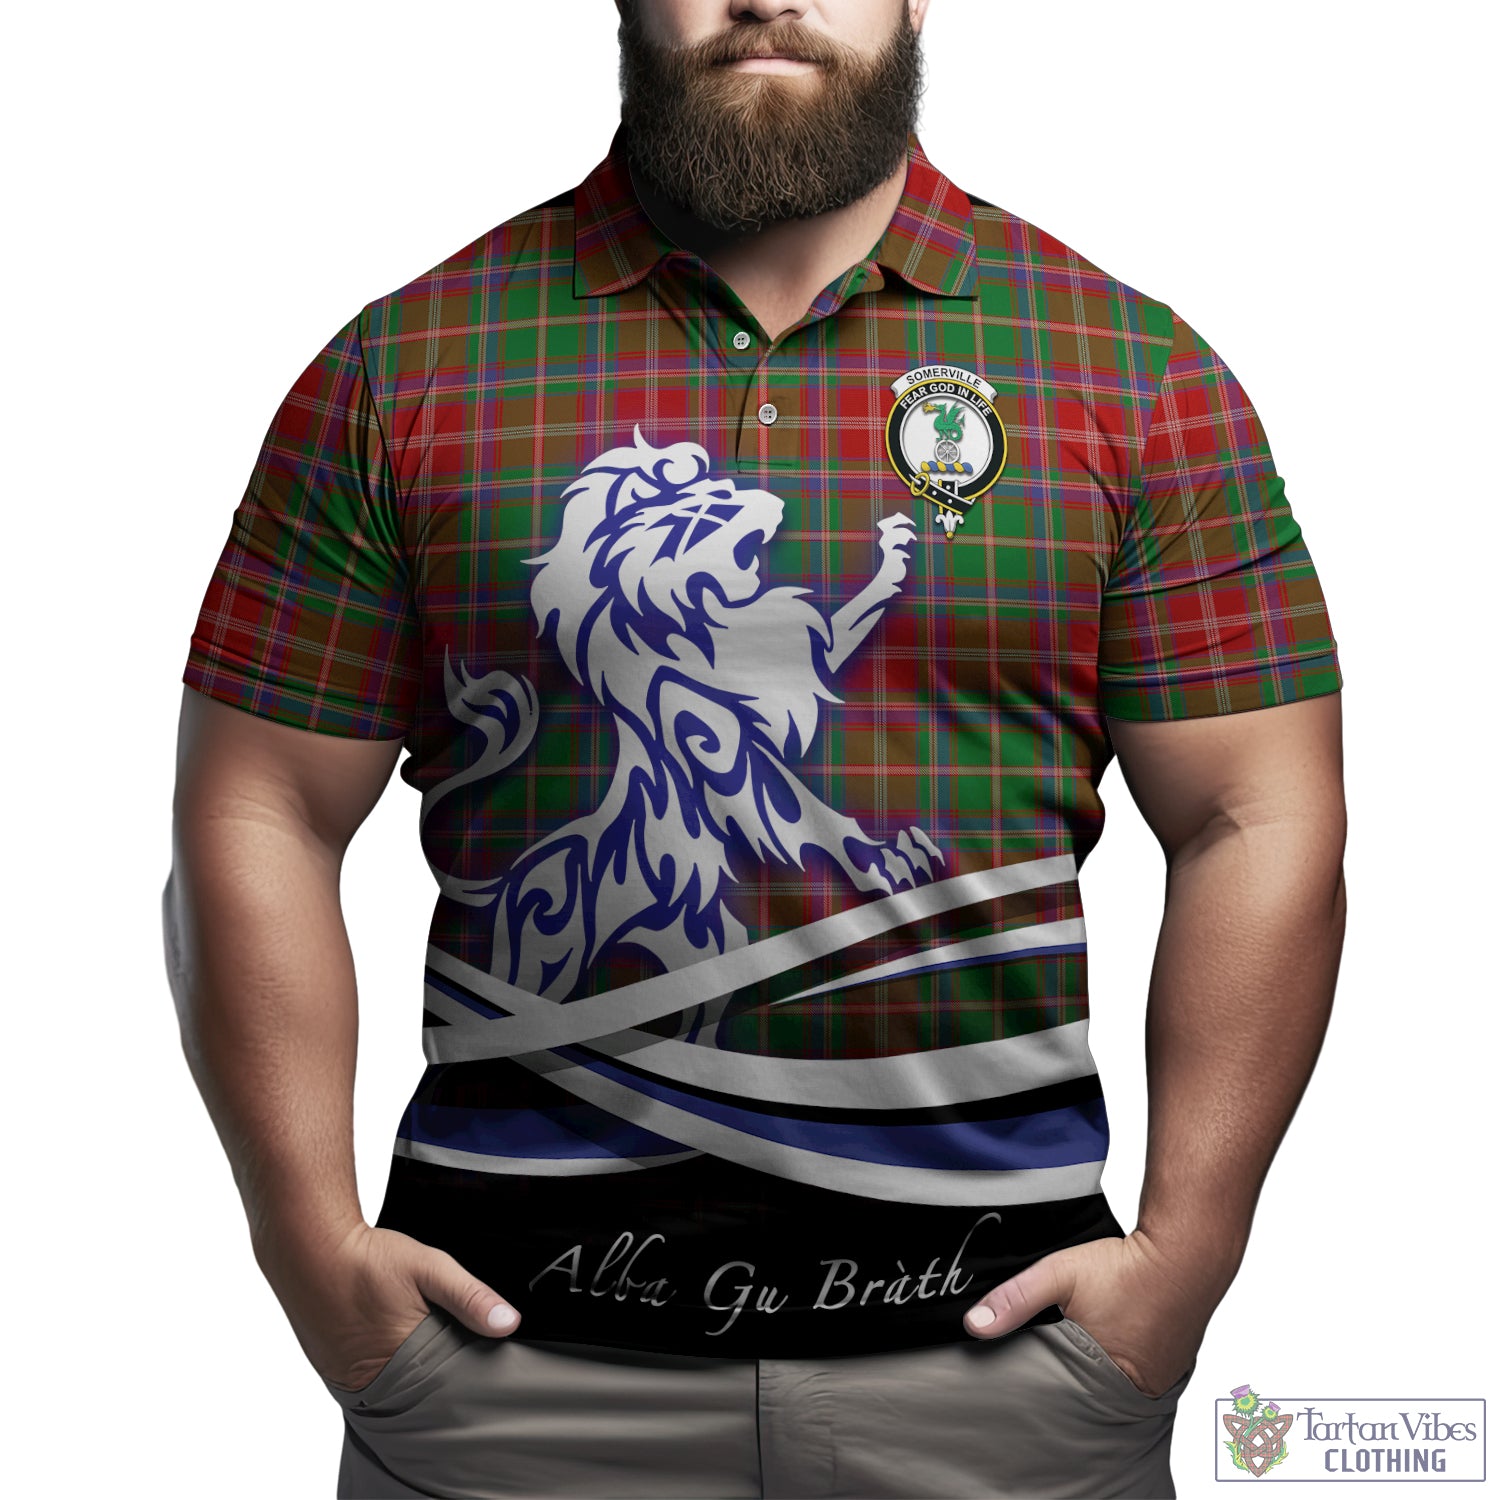 somerville-tartan-polo-shirt-with-alba-gu-brath-regal-lion-emblem